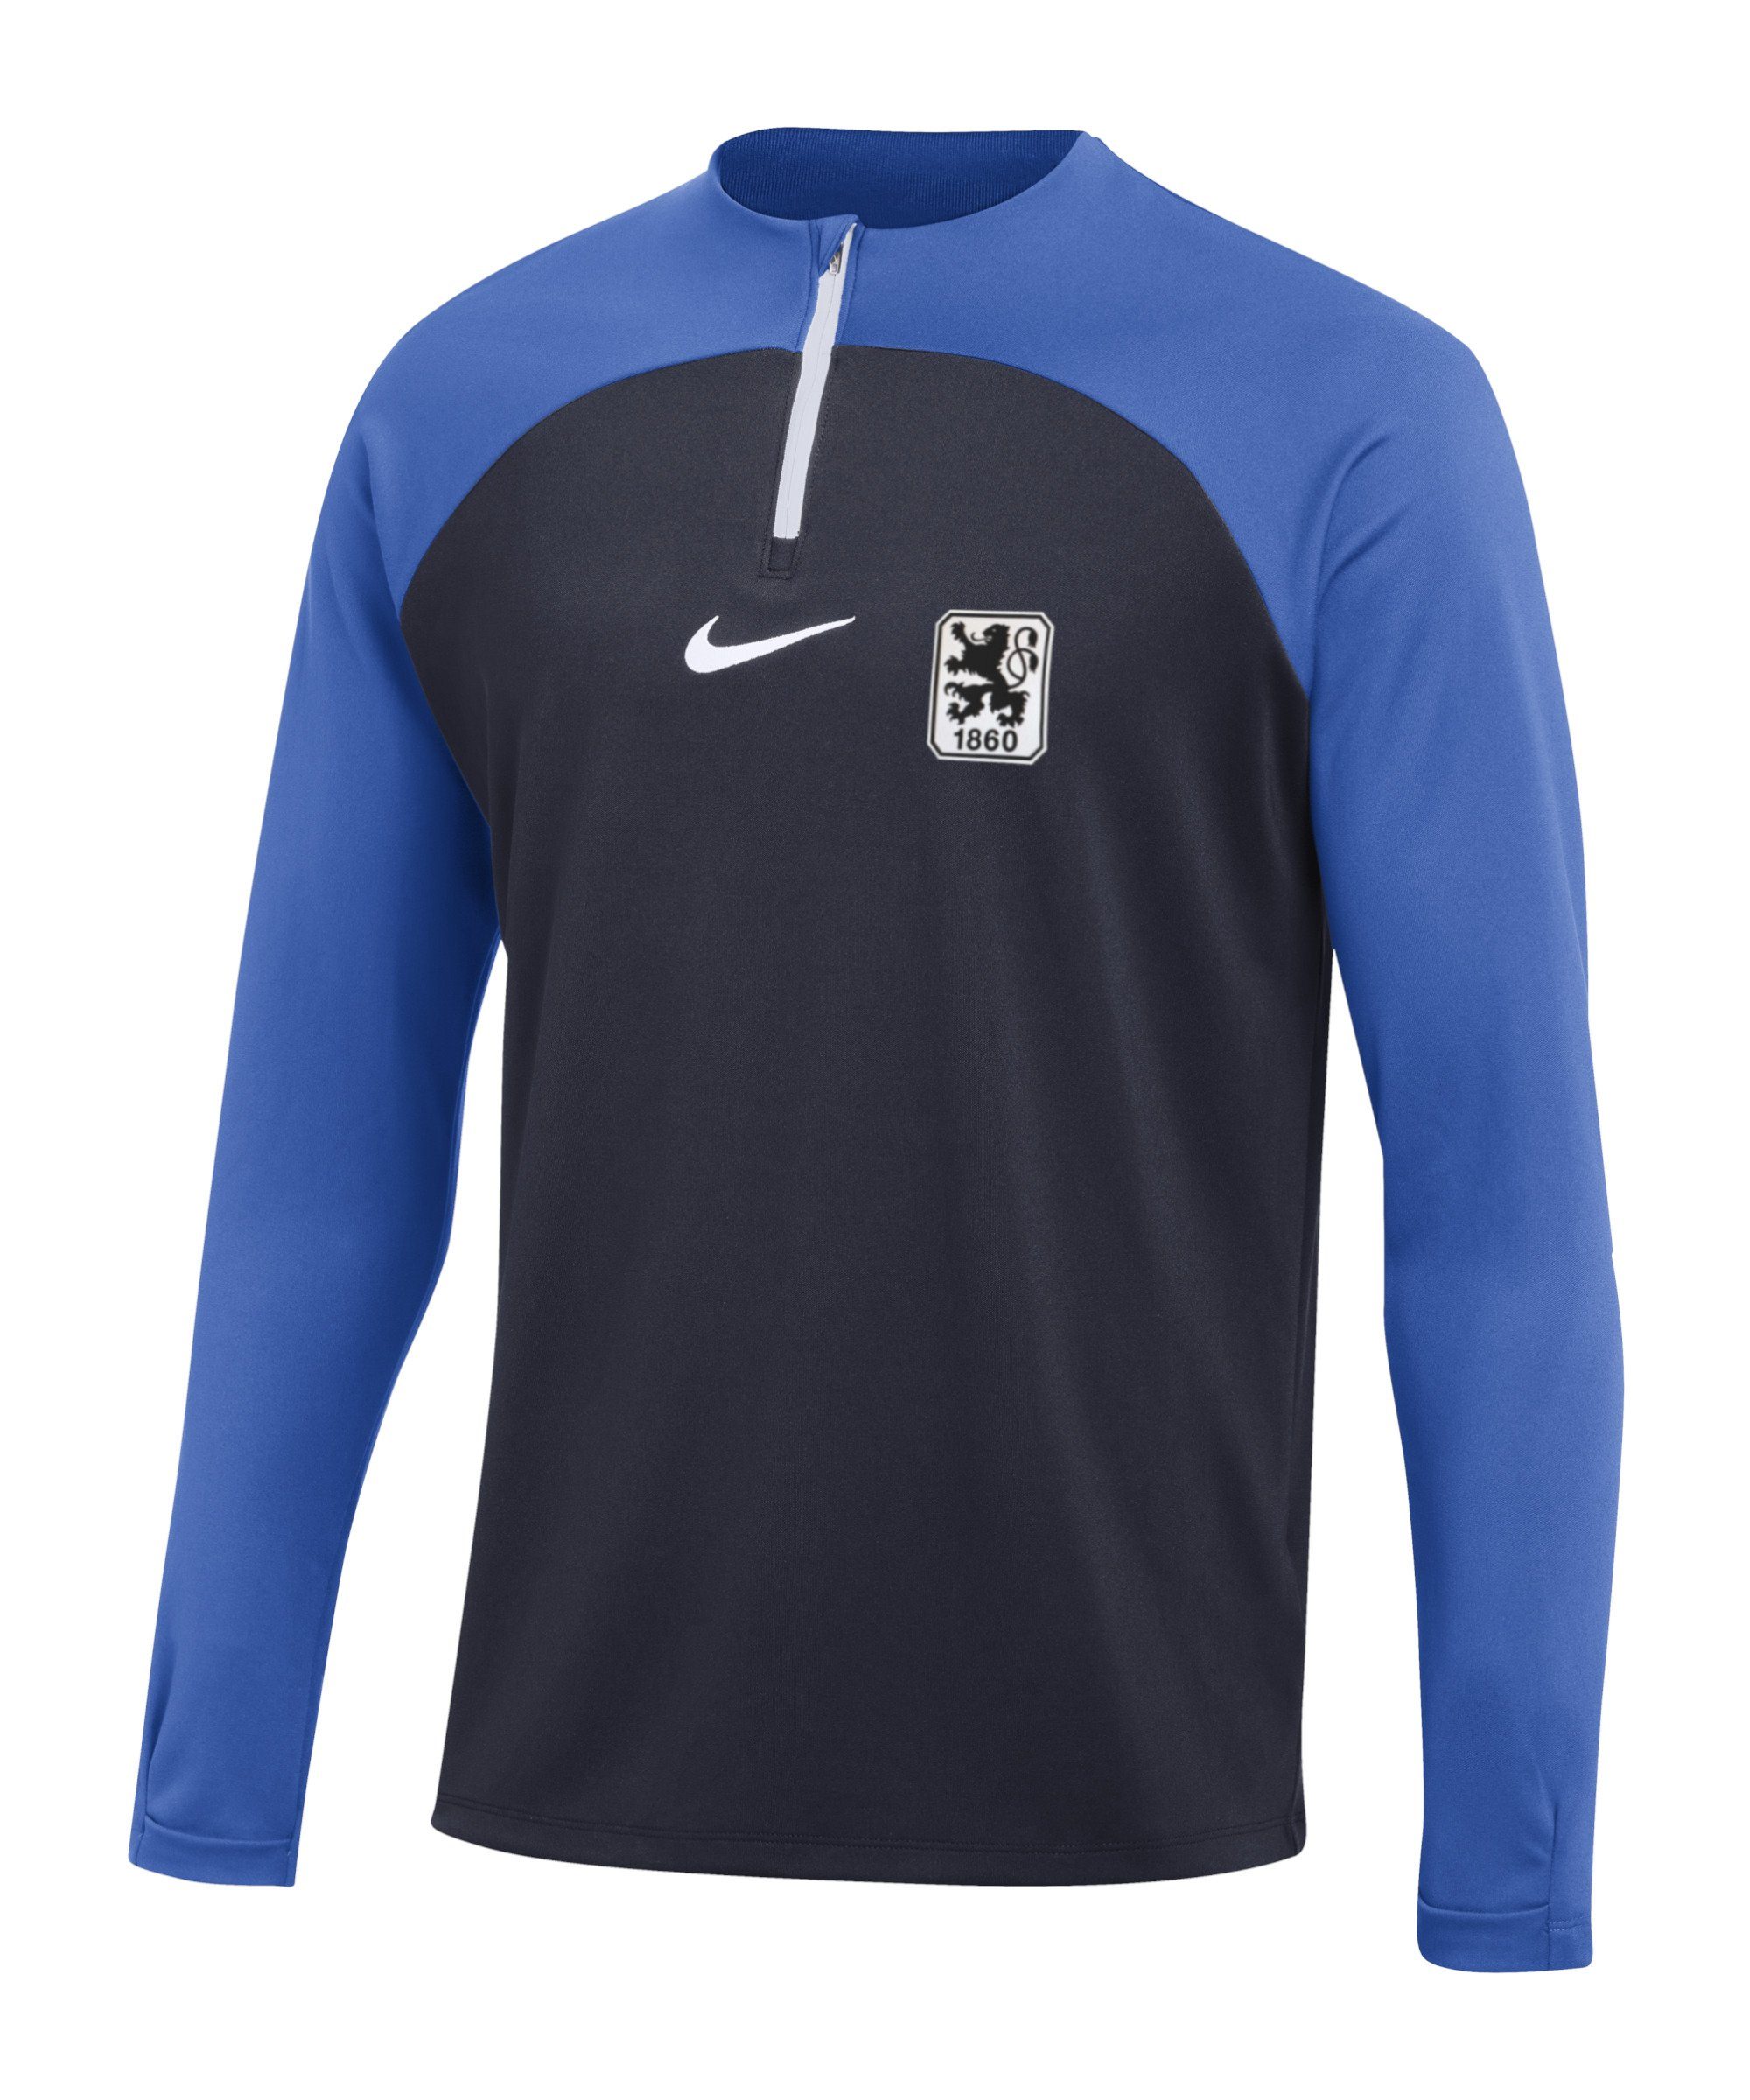 Nike Sweatshirt TSV 1860 München Drill Top